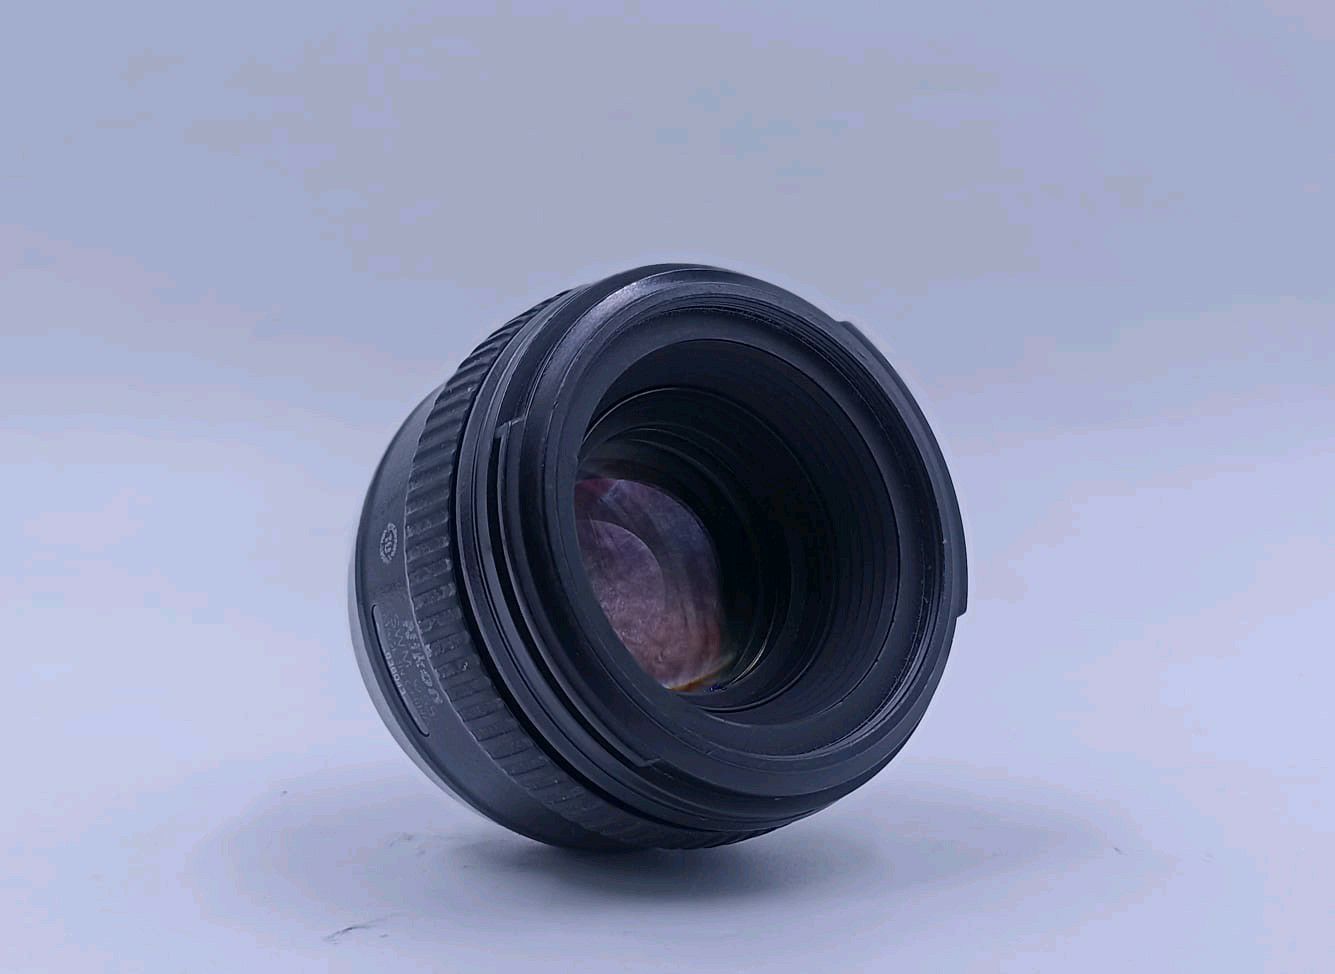 Used Nikon EF S 50 MM F 1.4G Lens